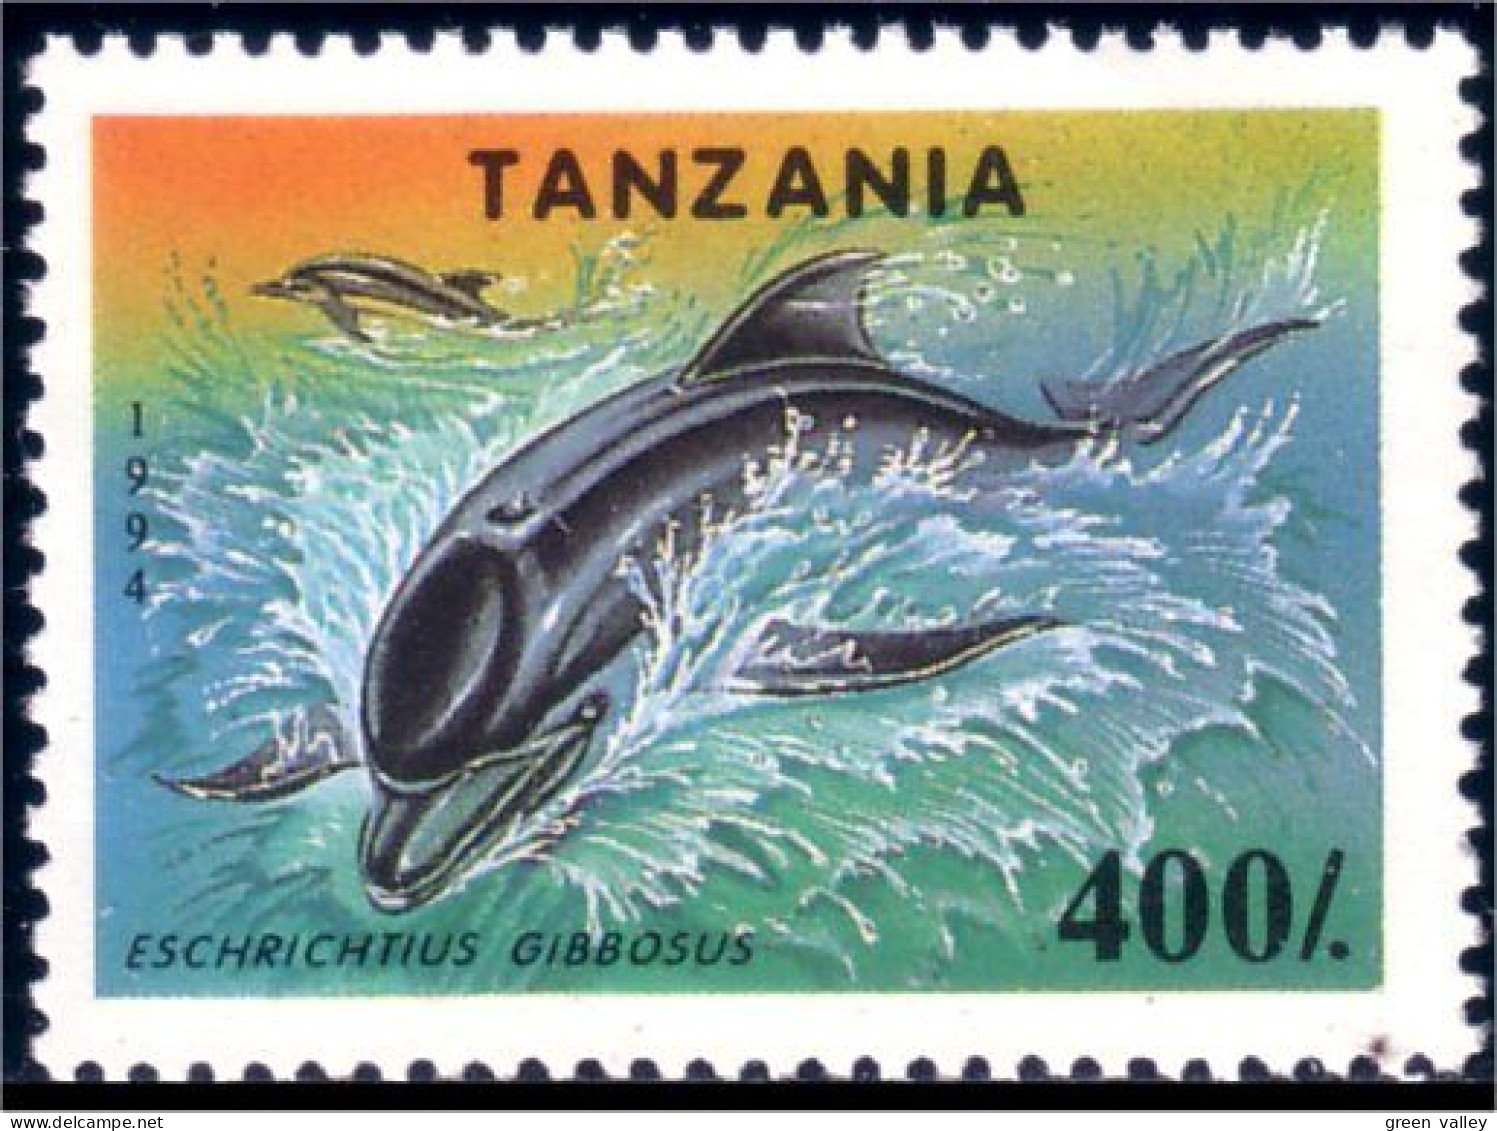 866 Tanzania Dolphin Dauphin MNH ** Neuf SC (TZN-80b) - Delfine